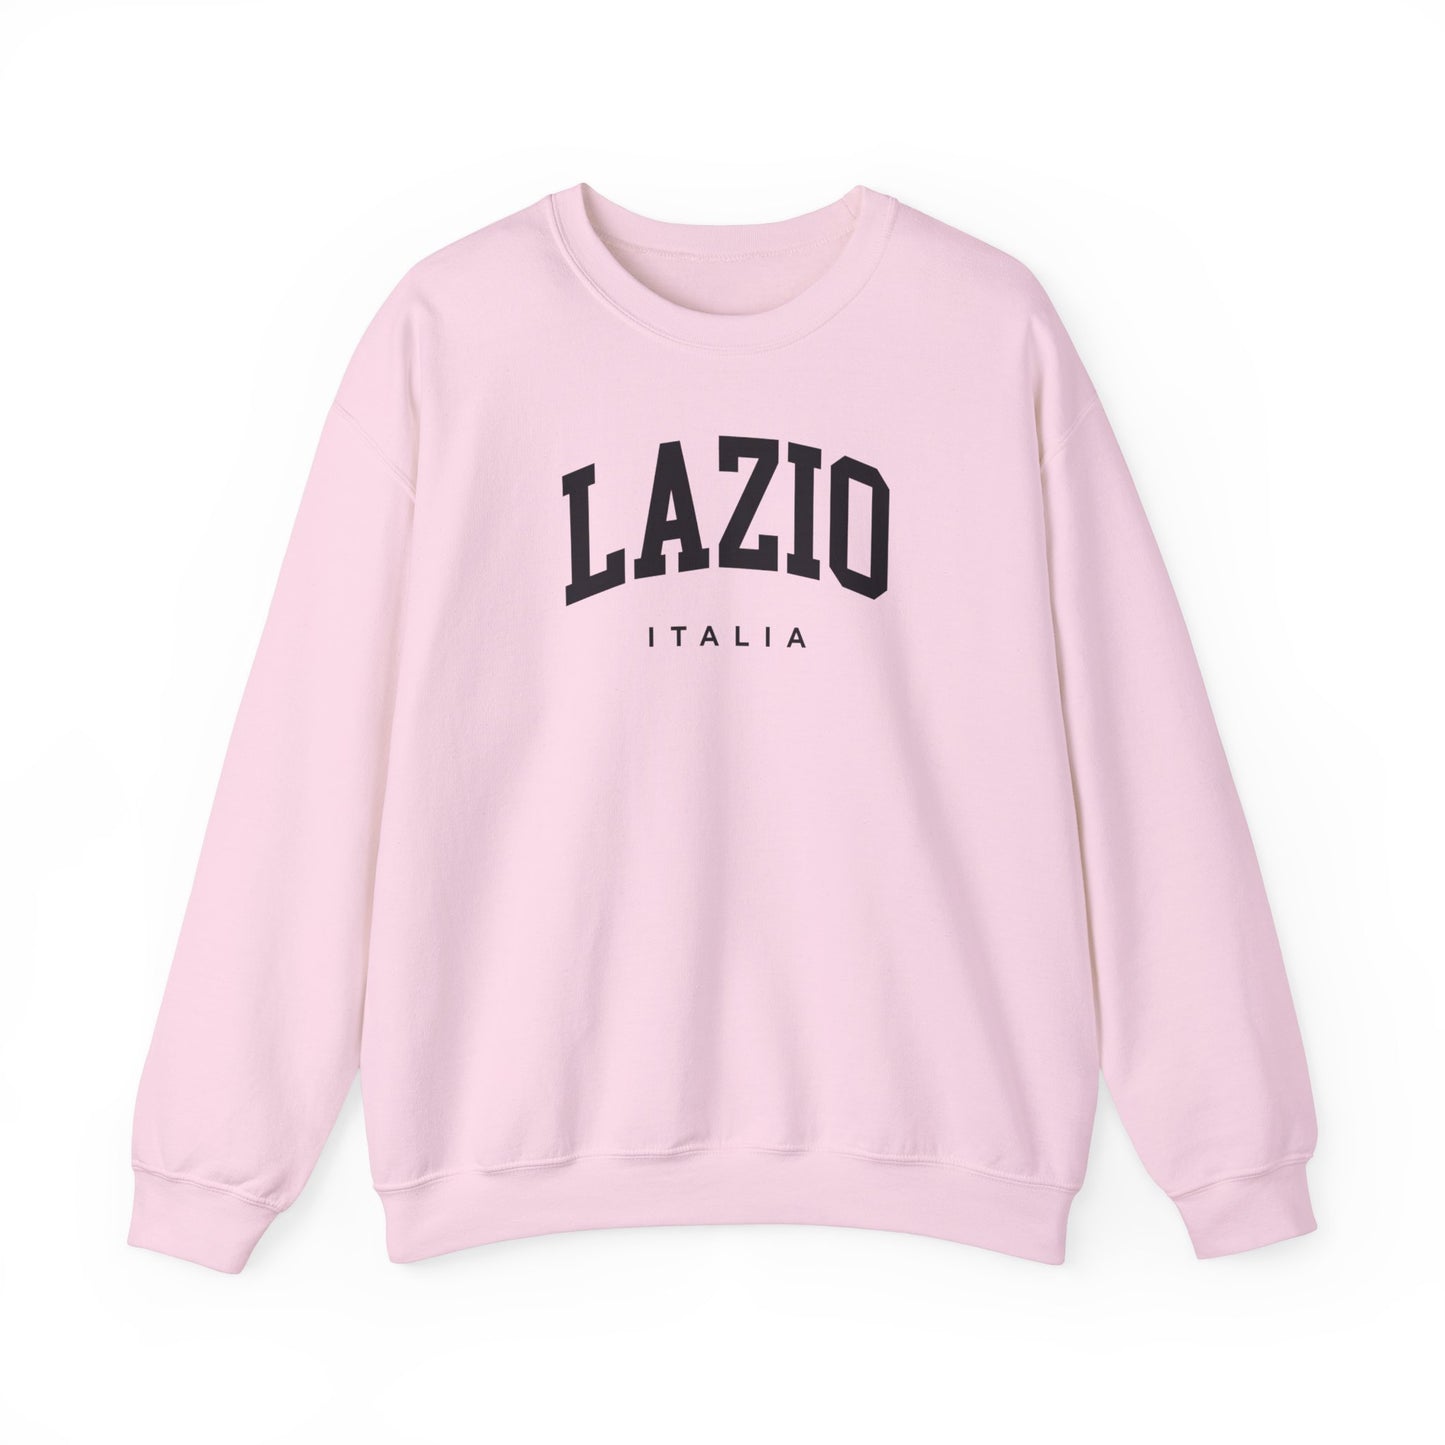 Lazio Italy Sweatshirt